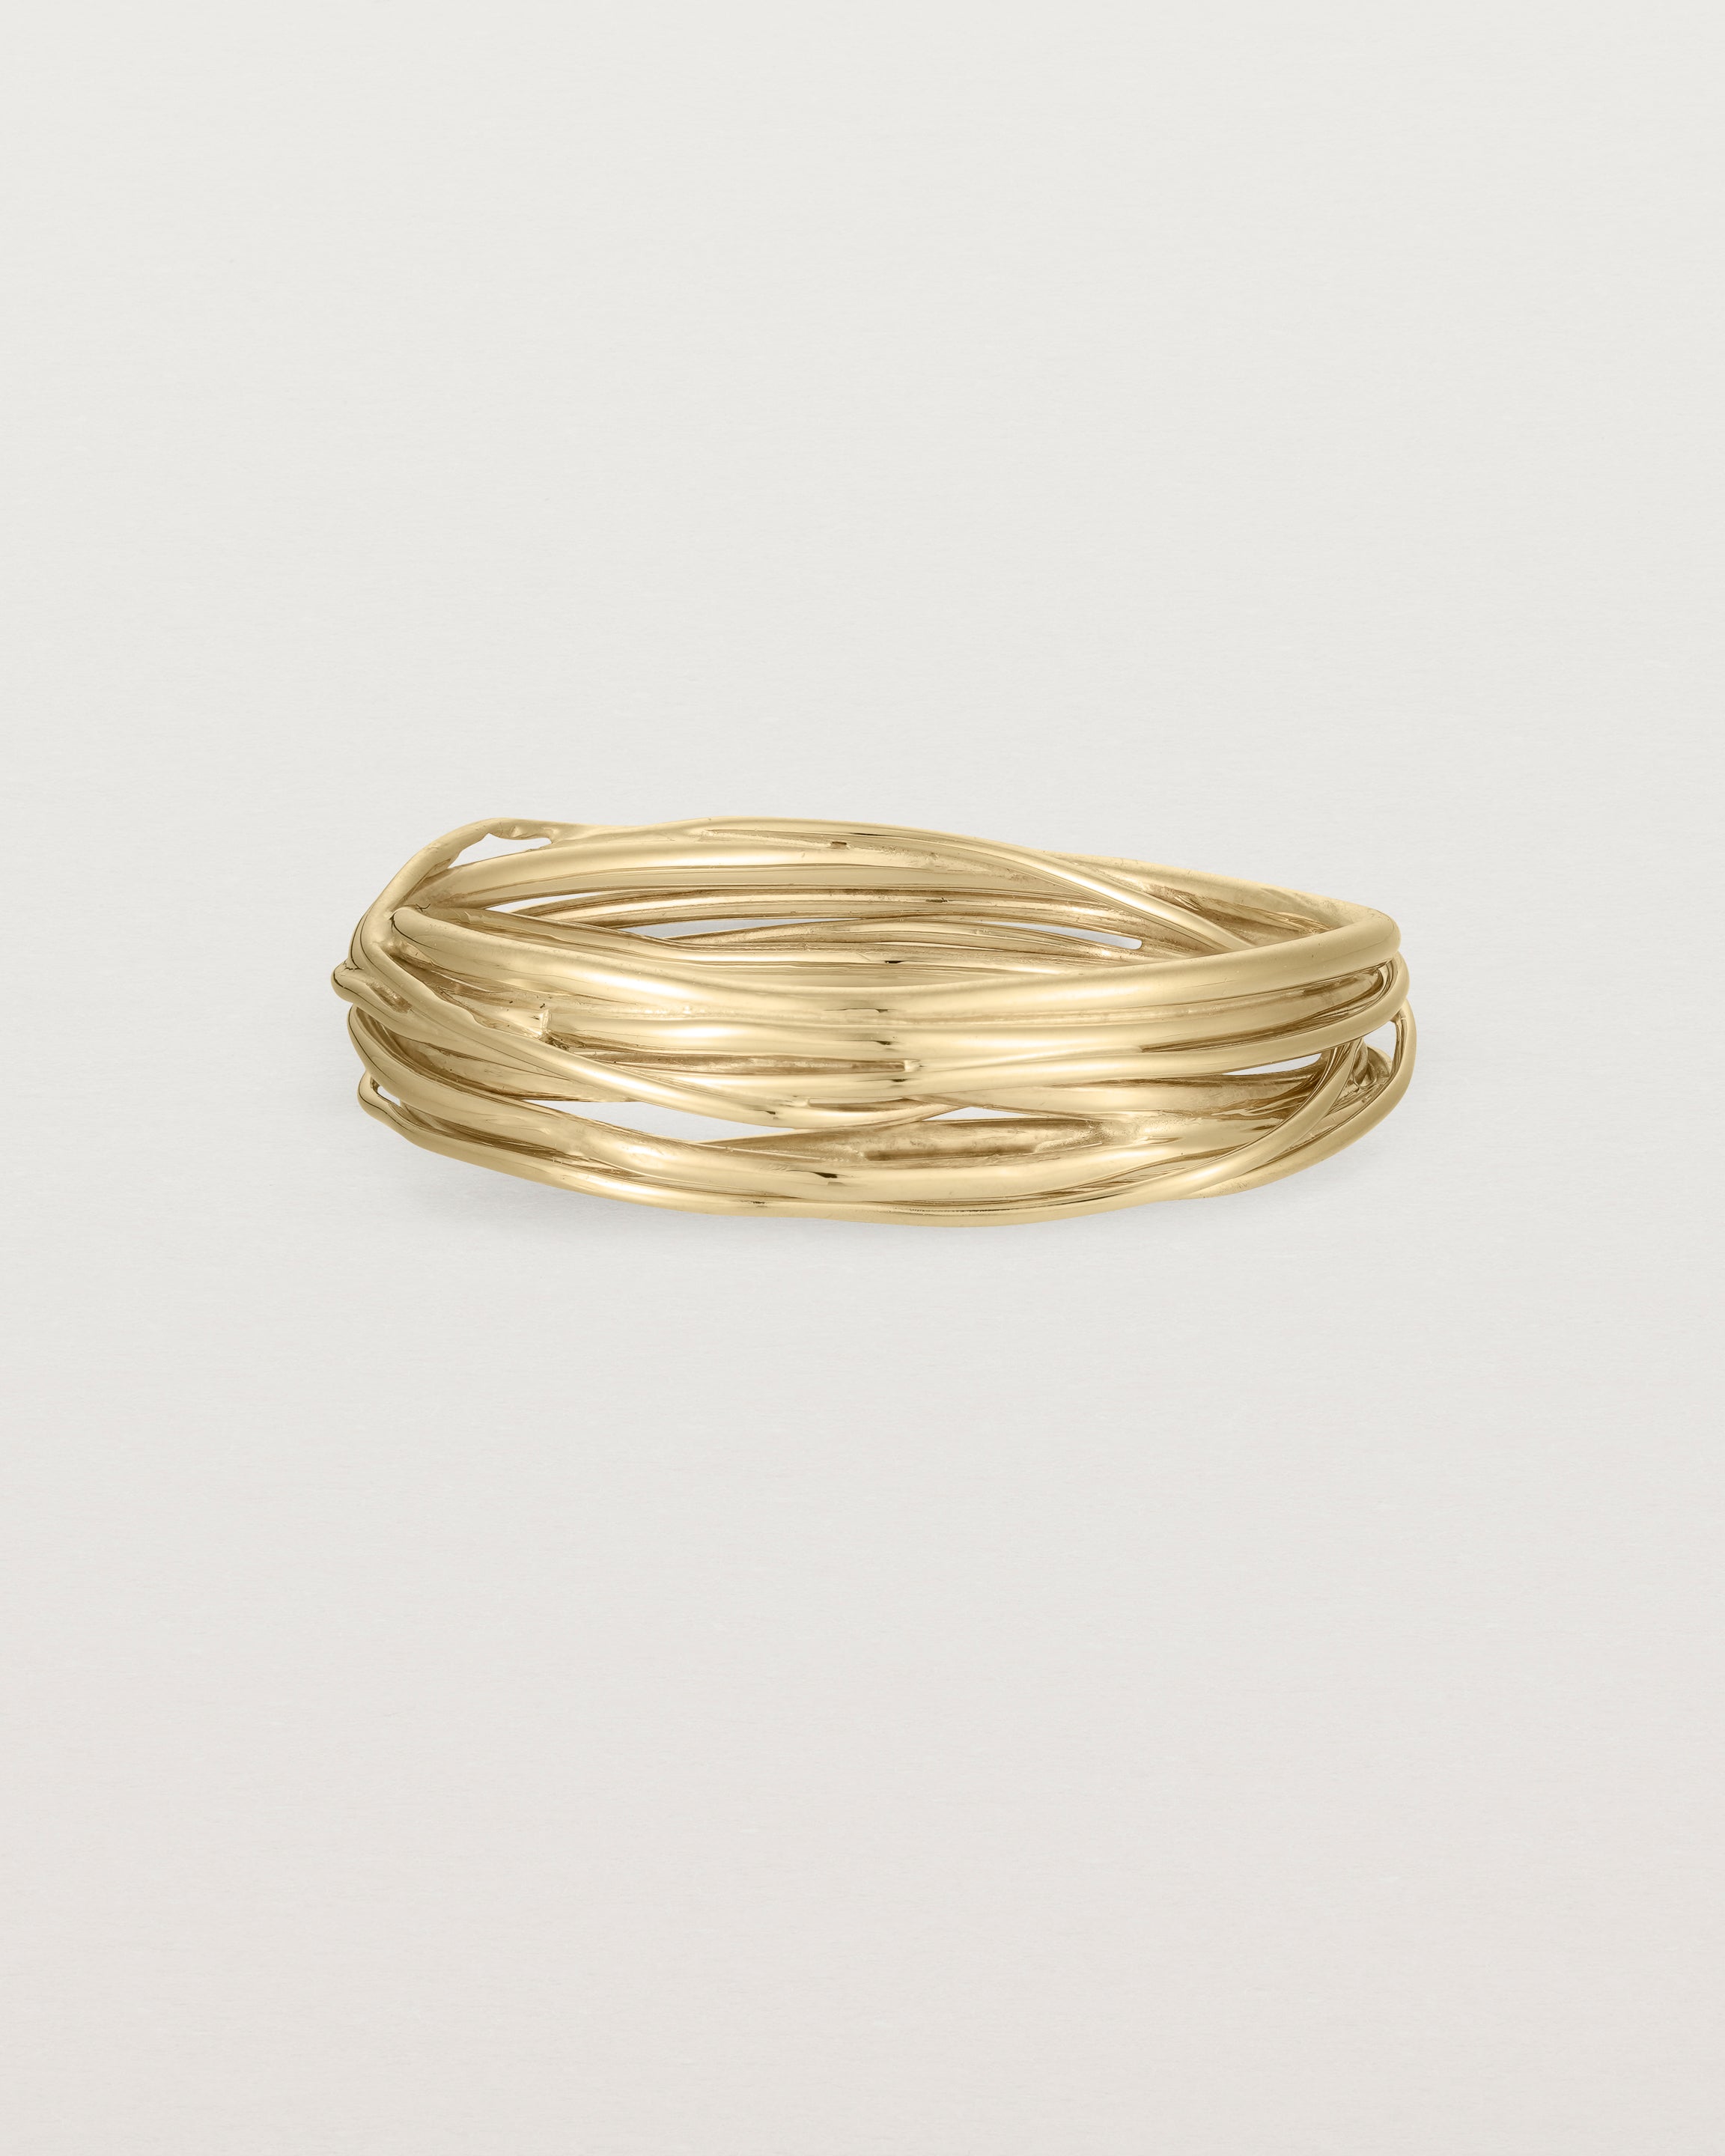 The Kamali Ring in Yellow Gold.